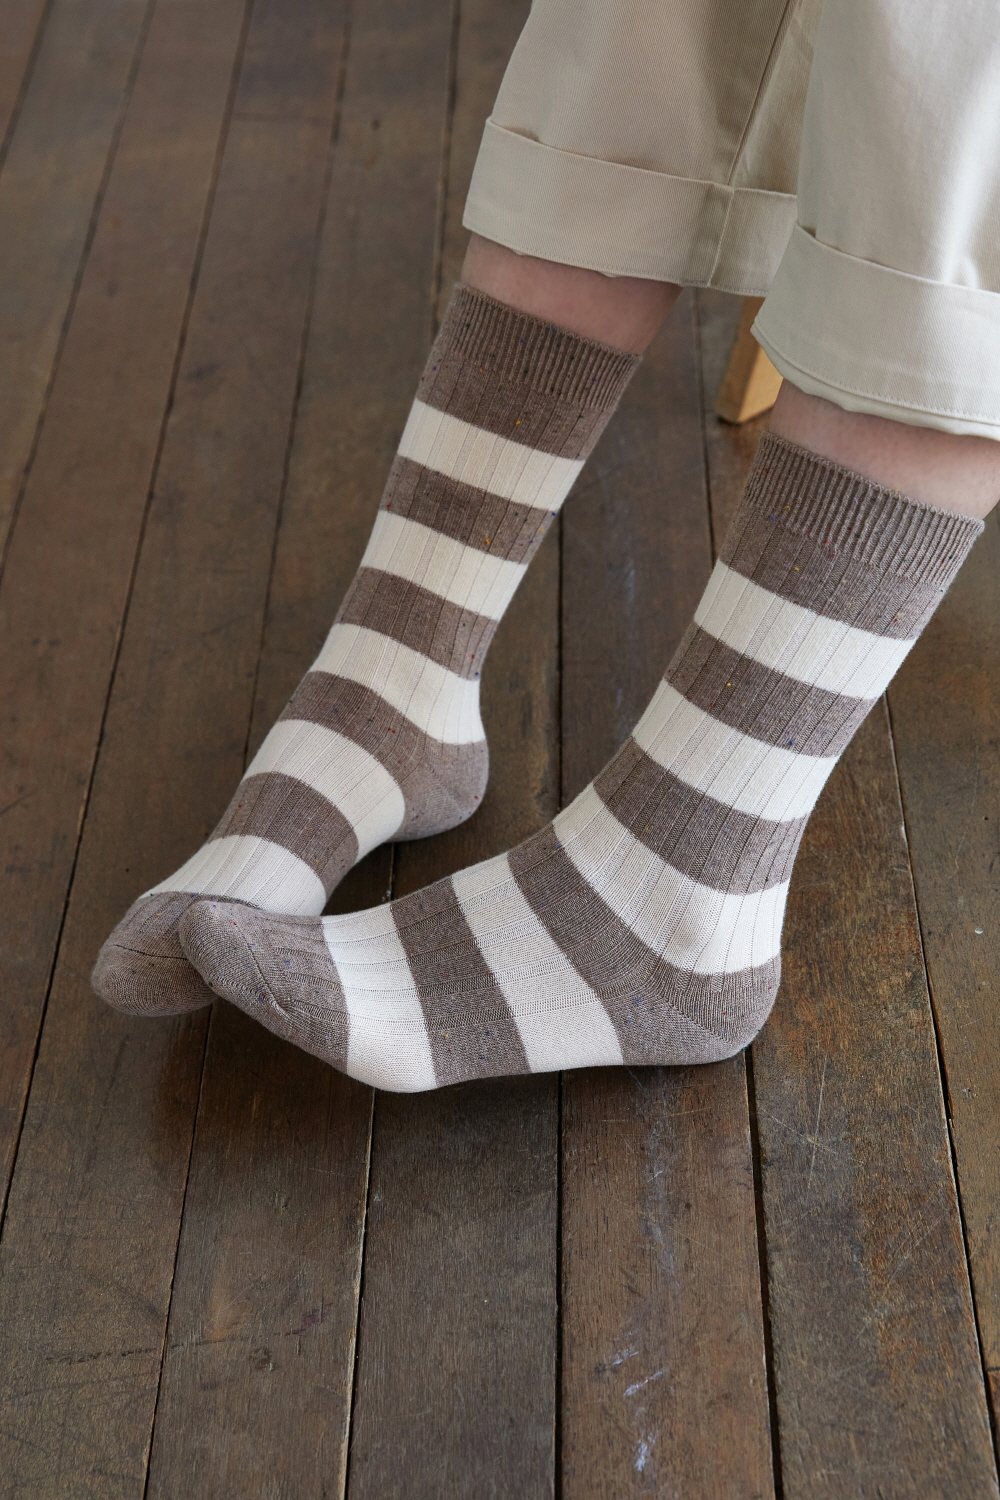 socks detail image-S1L43